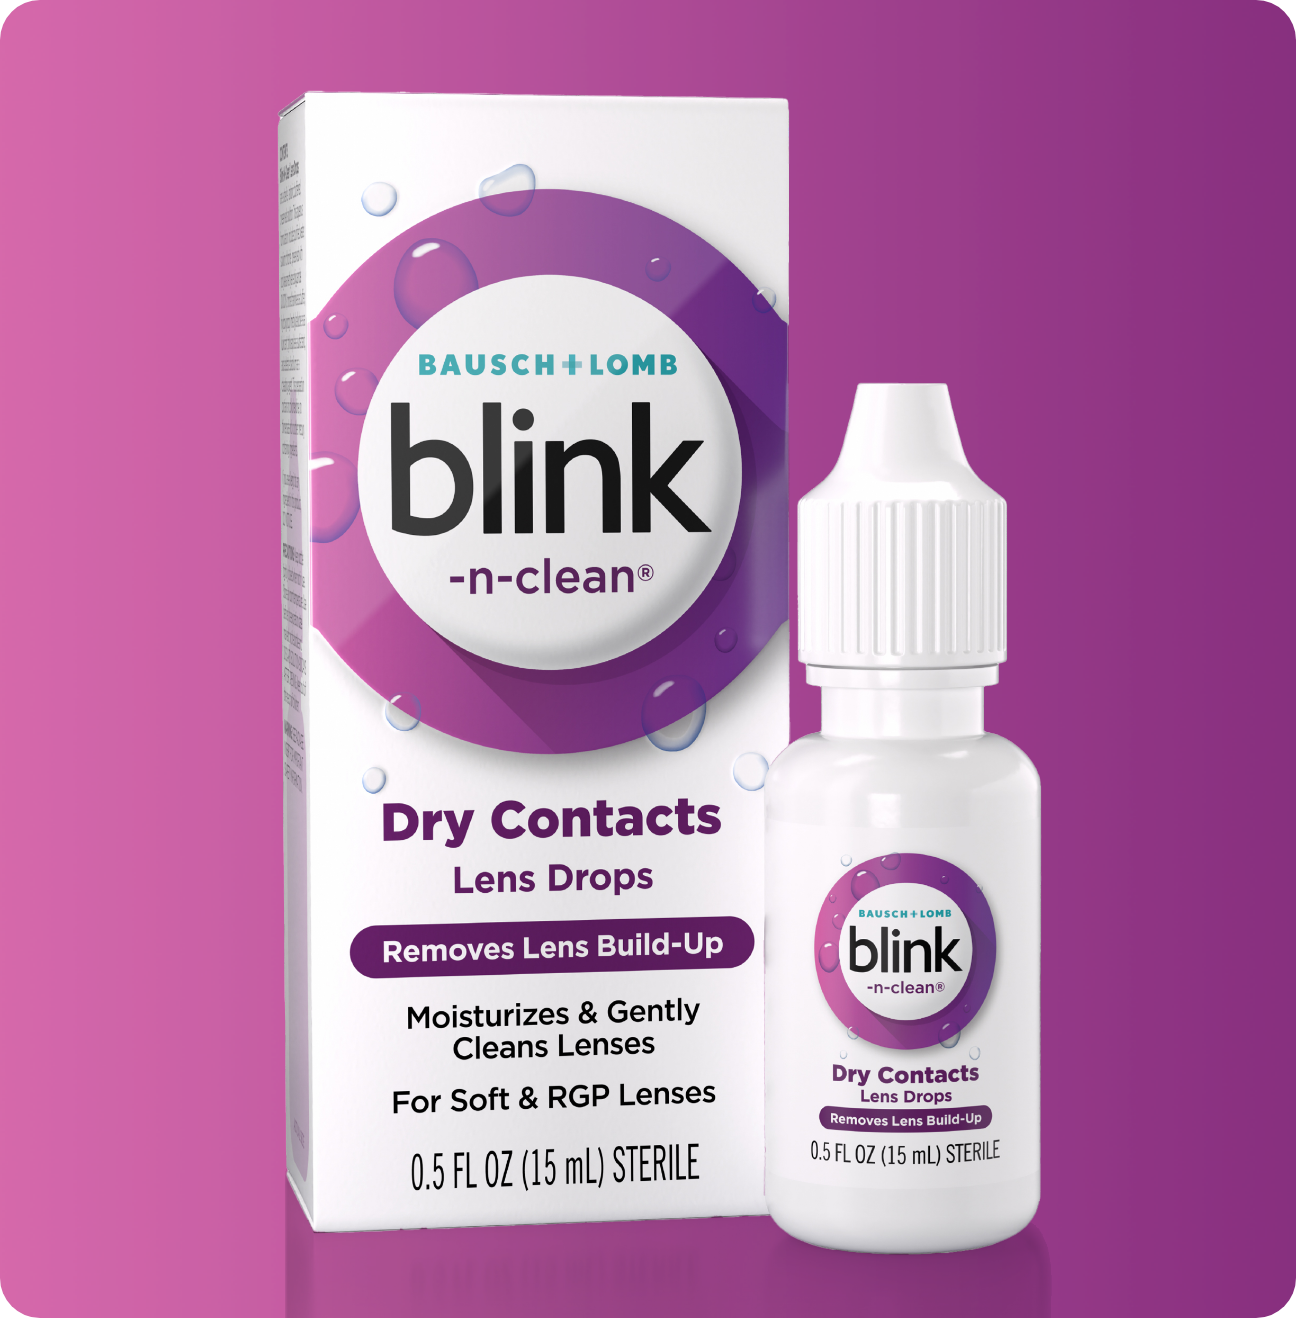 Blink-N-Clean Lens Drops bottle and carton